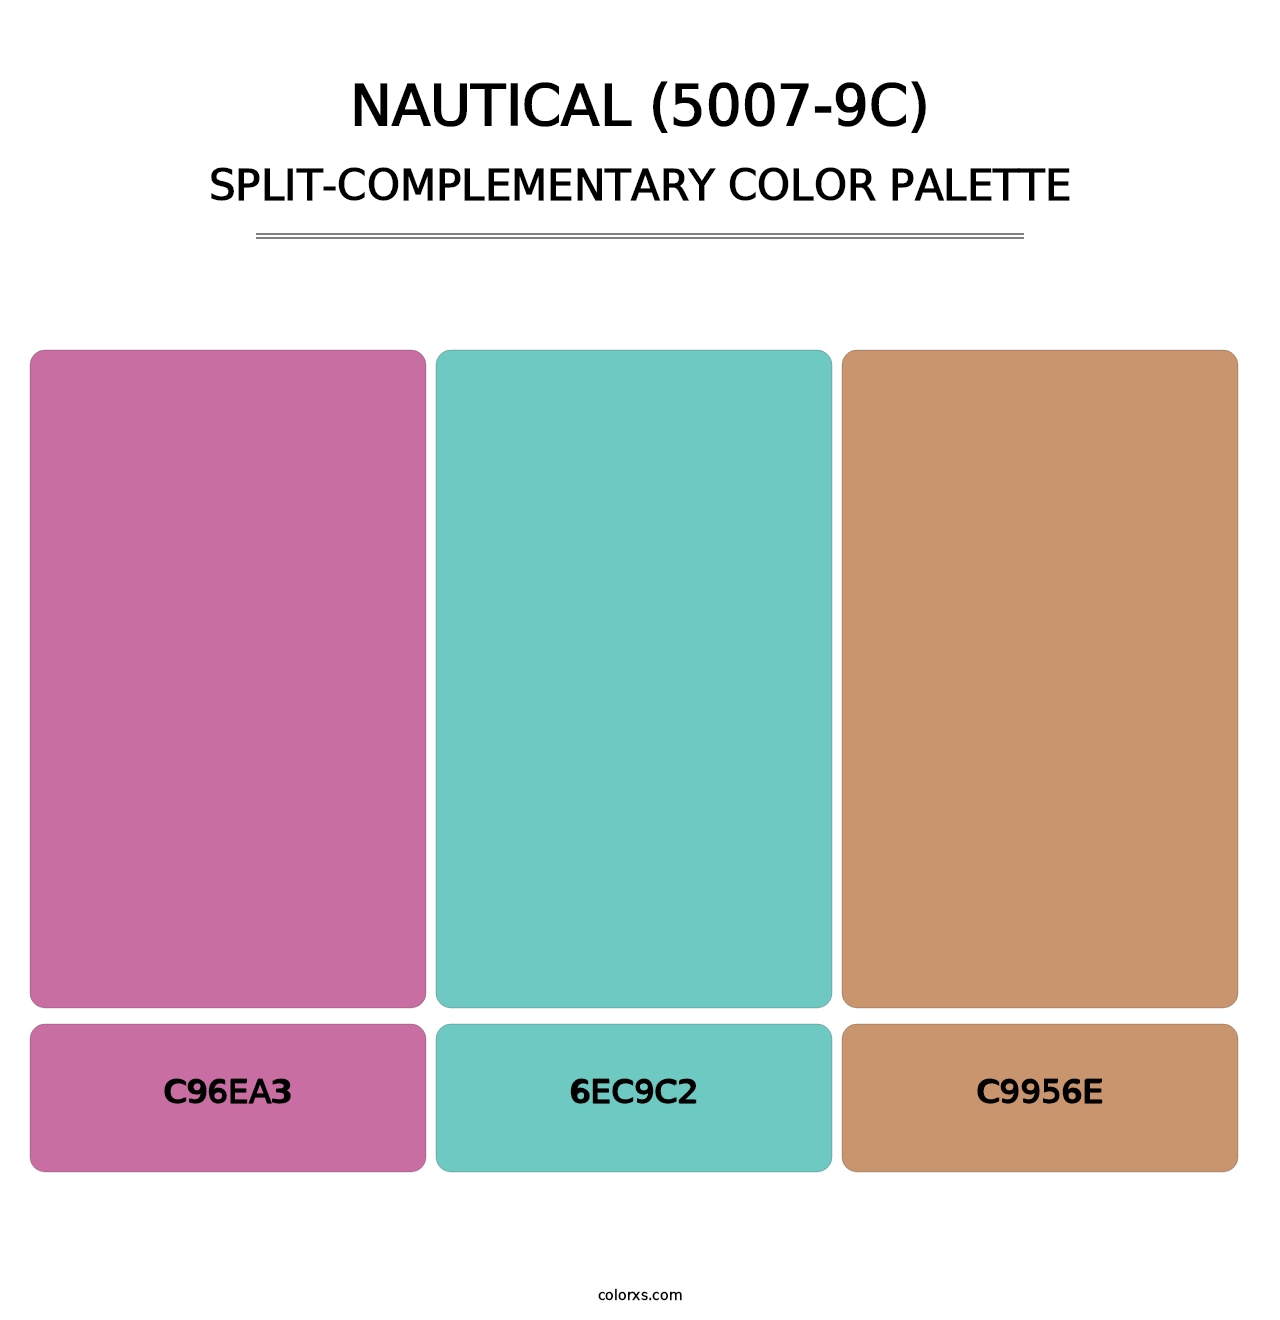 Nautical (5007-9C) - Split-Complementary Color Palette